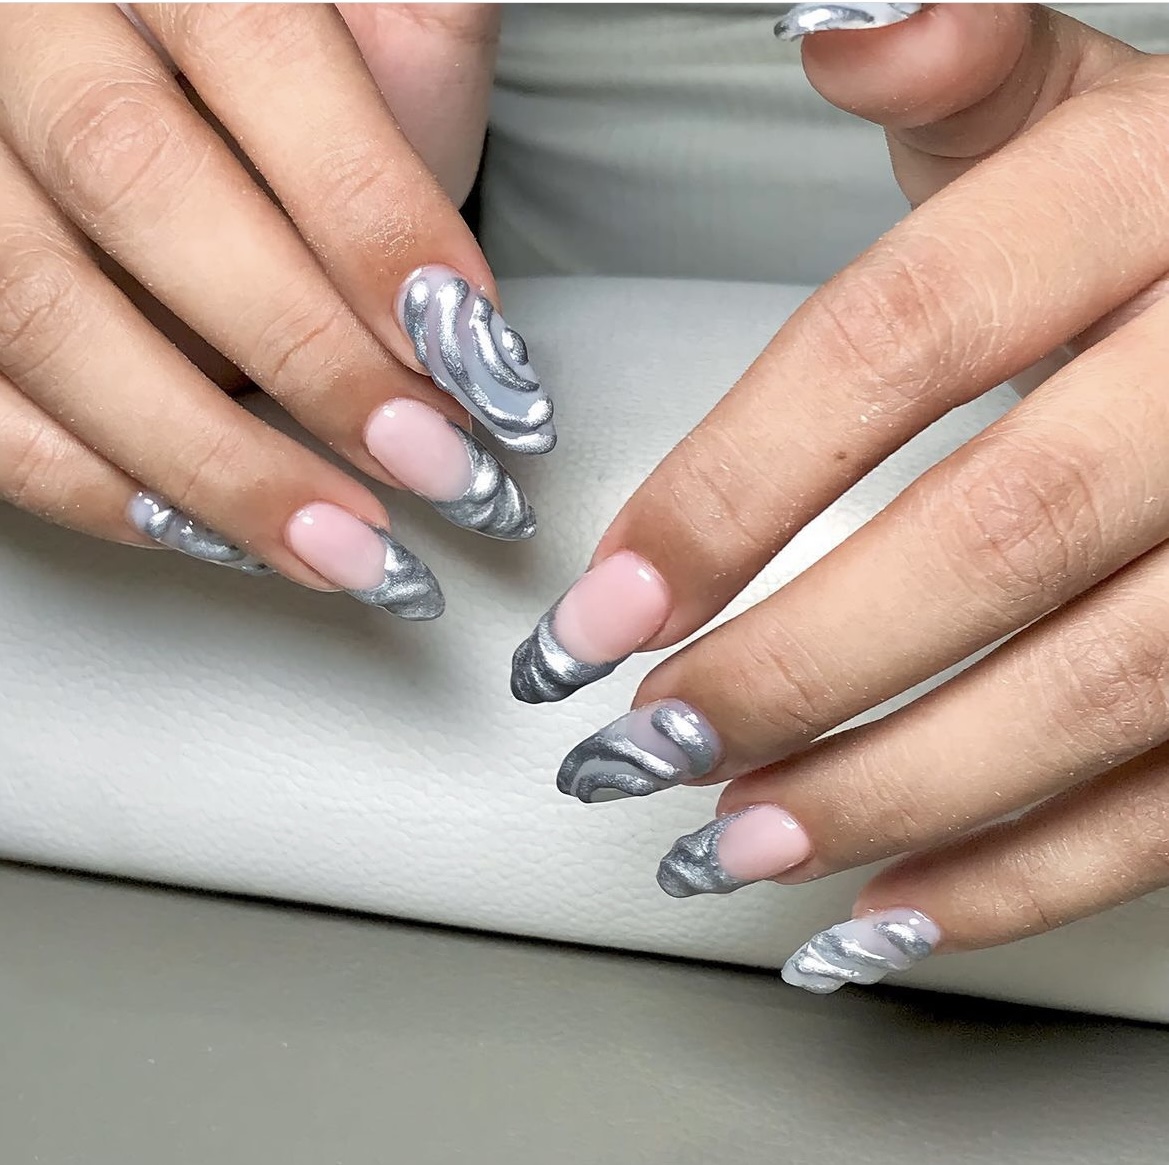 capricorn season nails ph metal manicure inspo